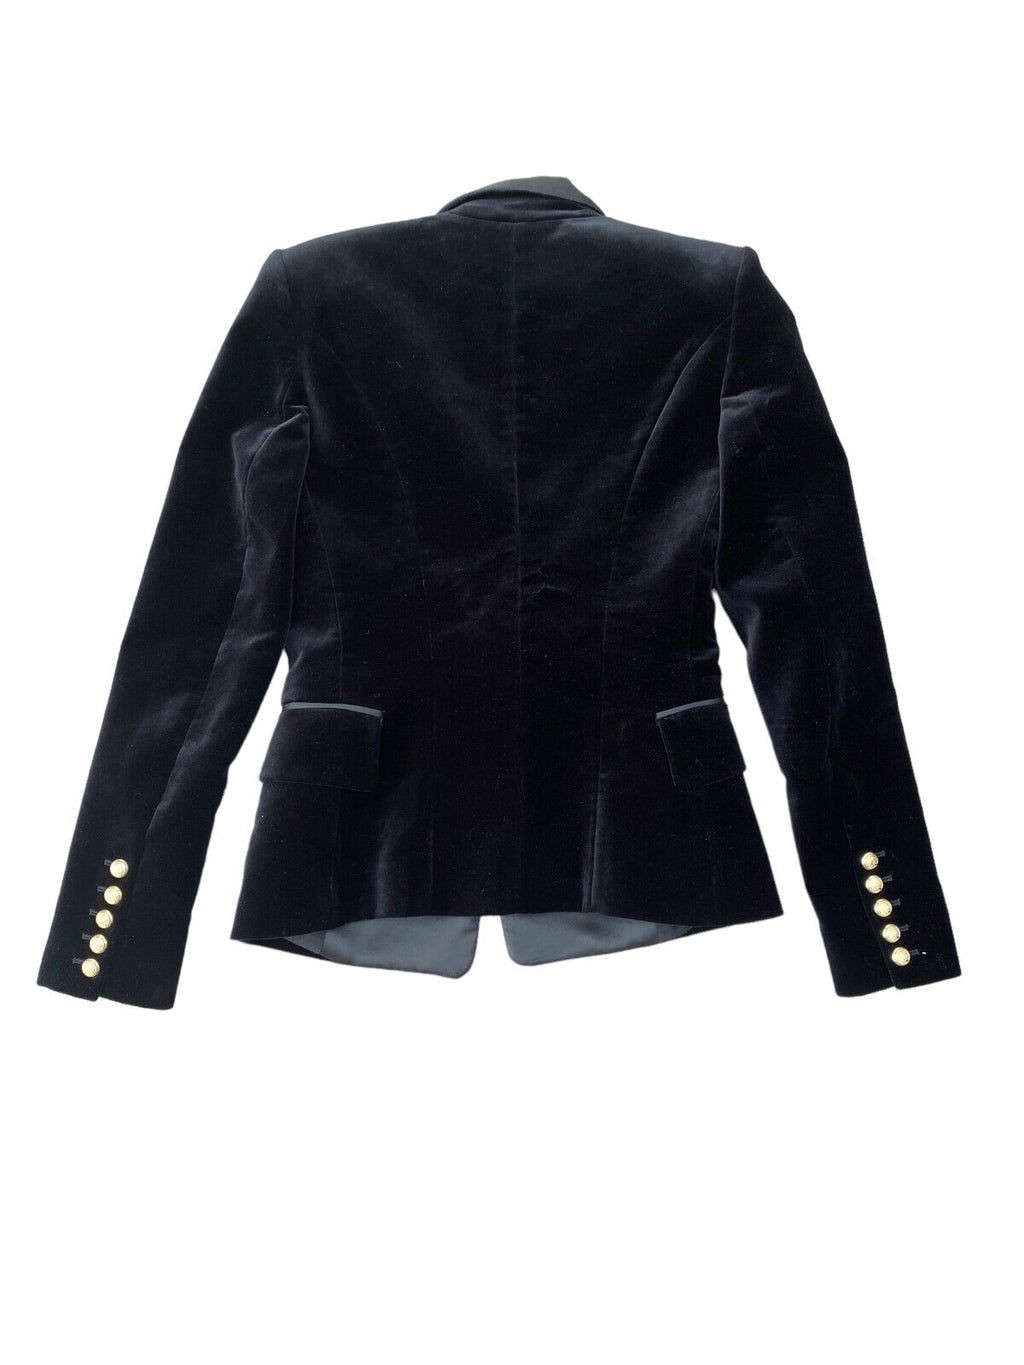 Black Velvet Blazer Jacket